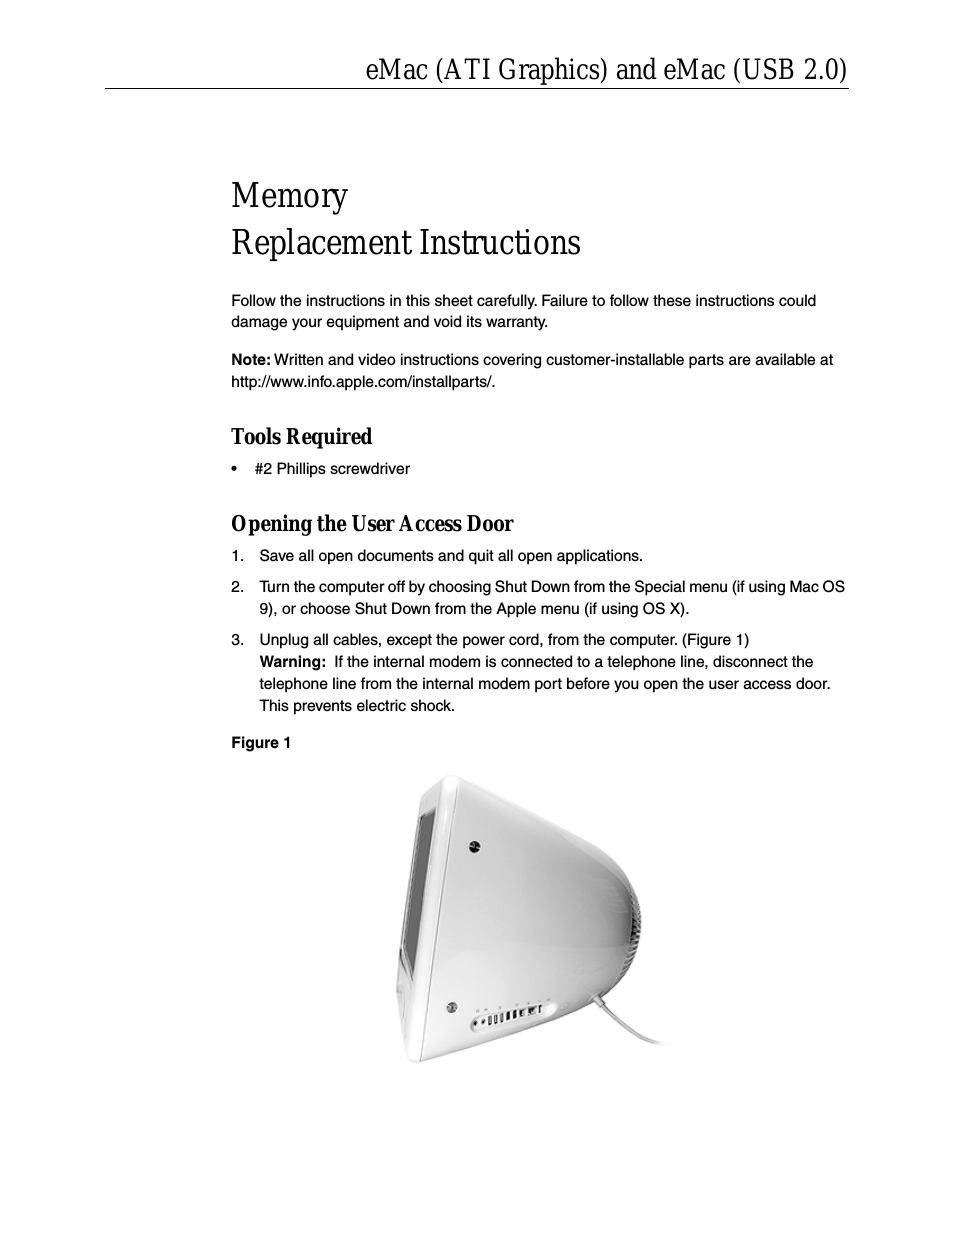 eMac ATI Graphics (Memory Replacement)